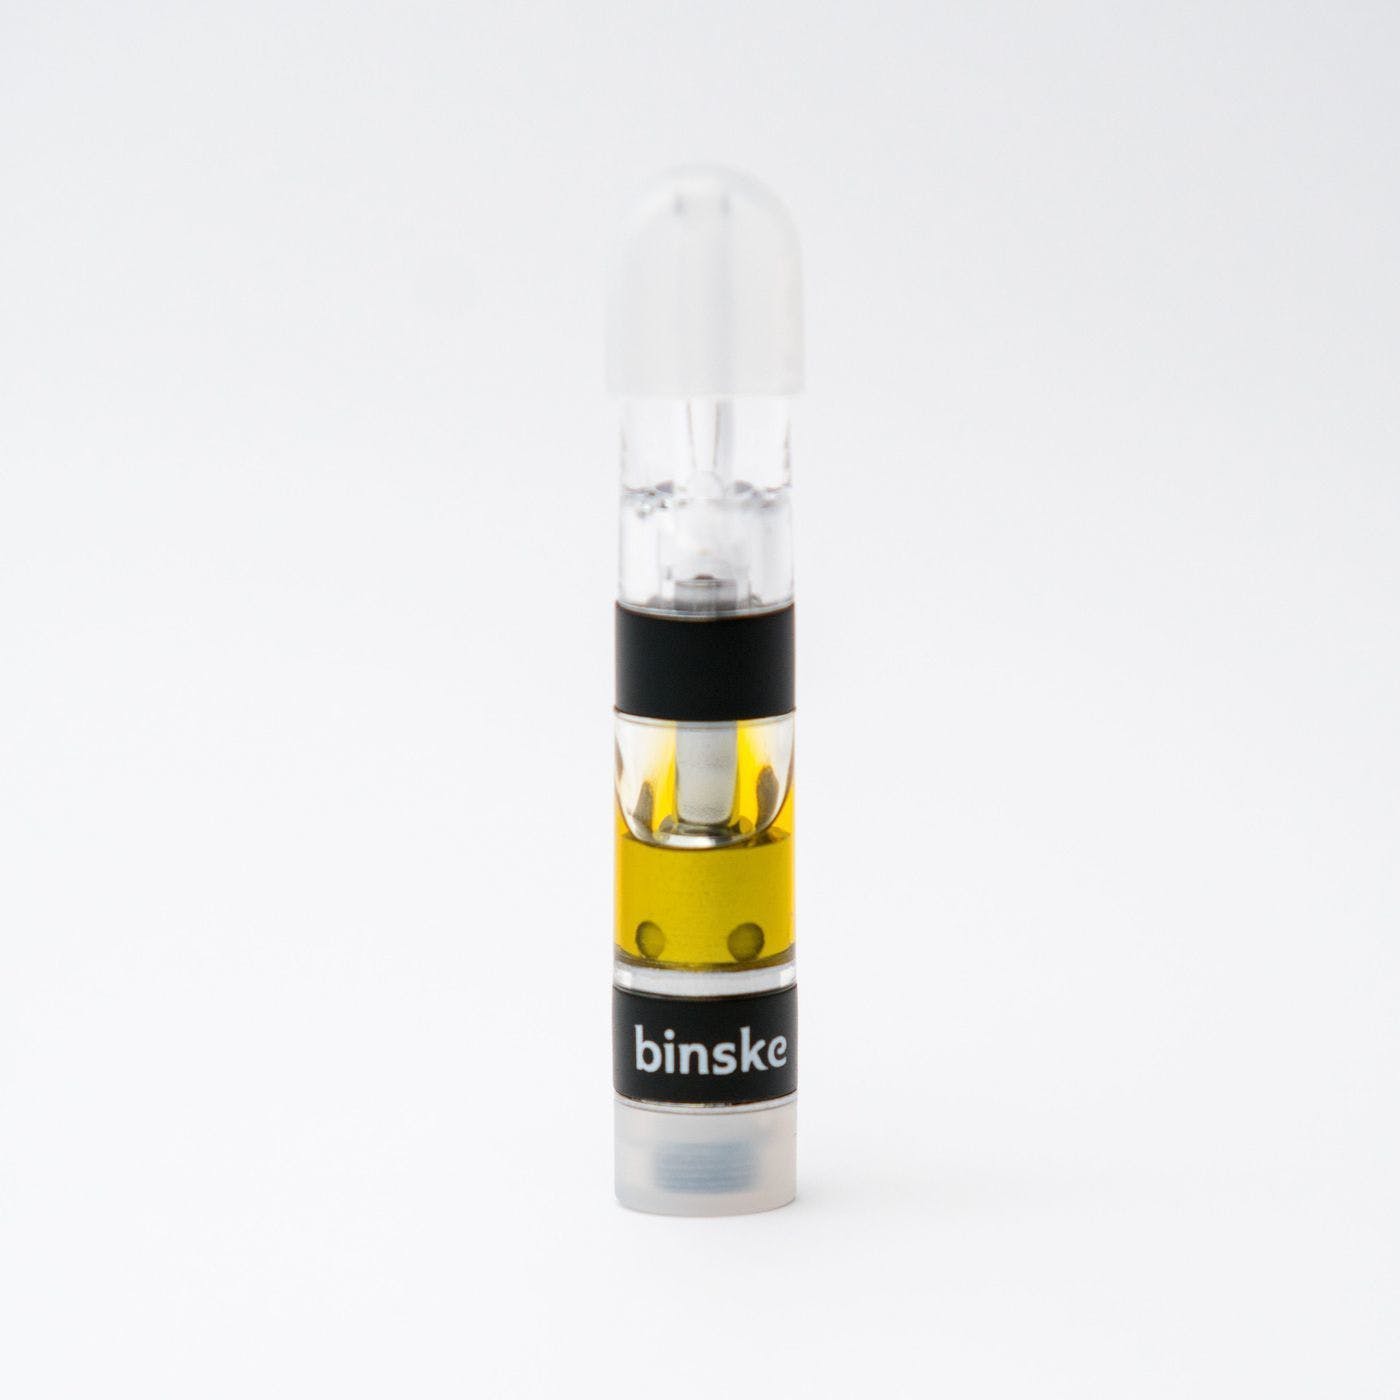 Lemon Sphinx Binske Live Resin Sauce Cartridge (58% THC), 500mg